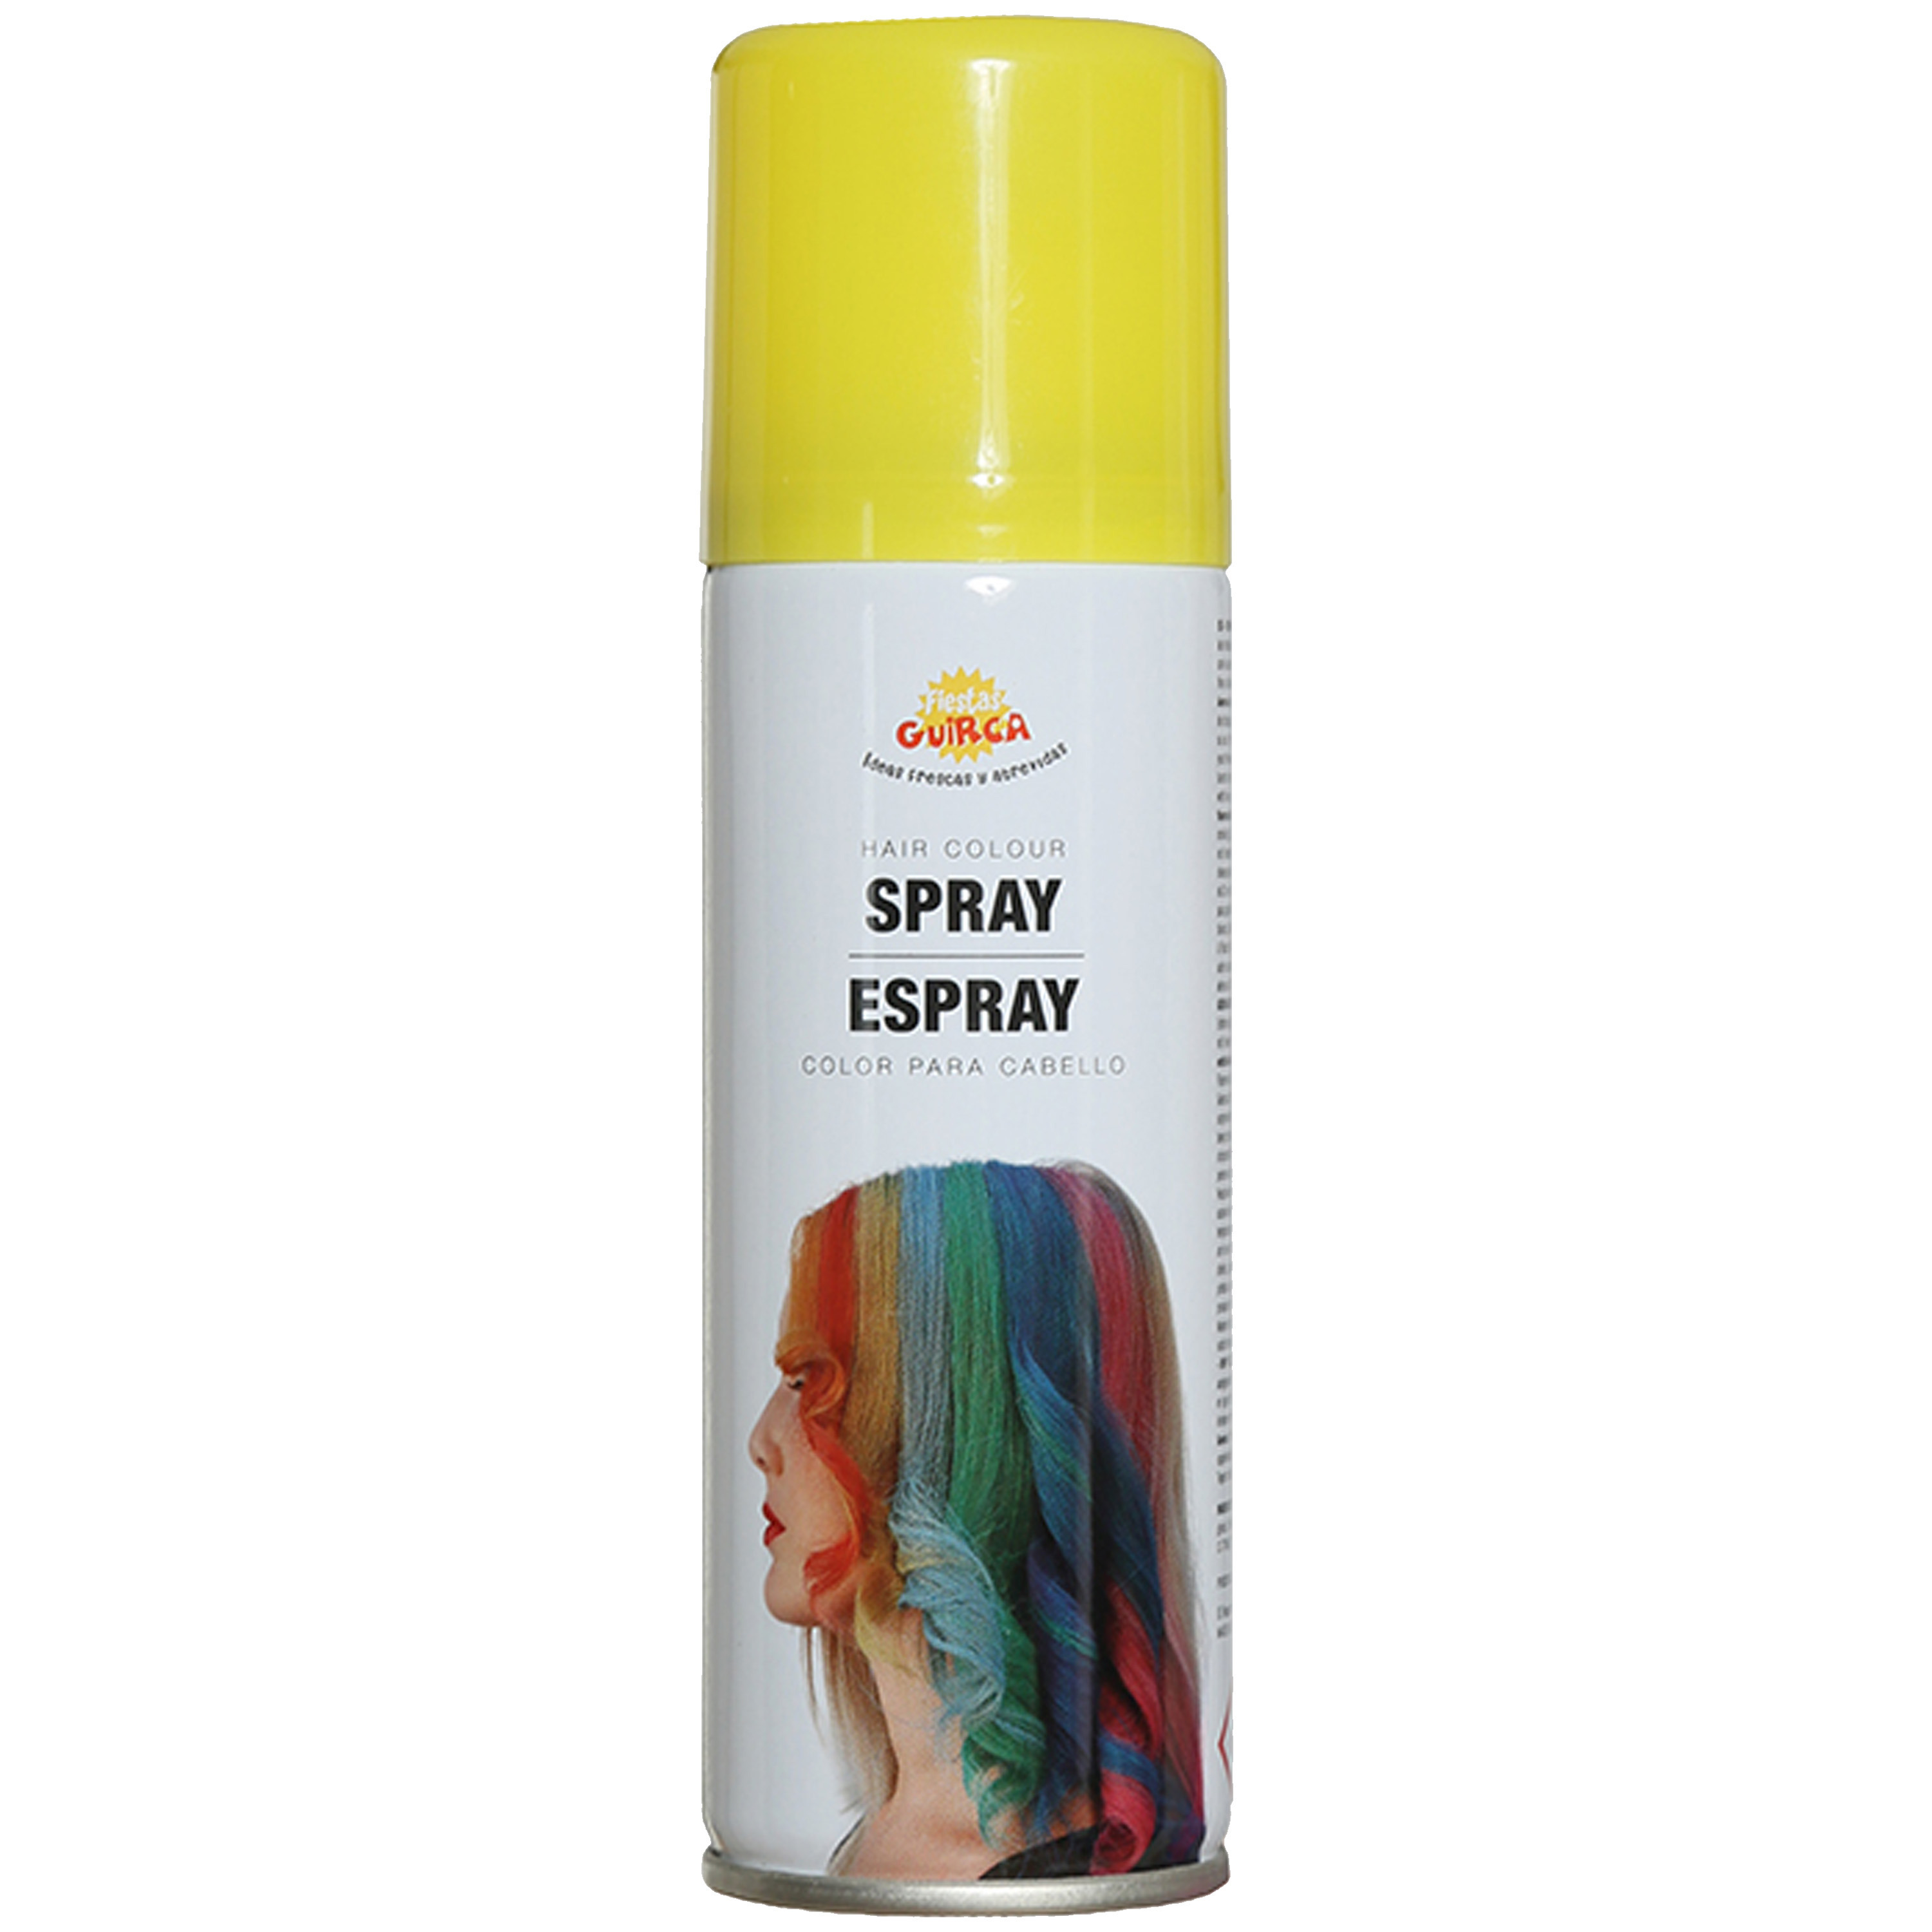 Afbeelding van Carnaval verkleed haar verf/spray - geel - spuitbus - 125 ml